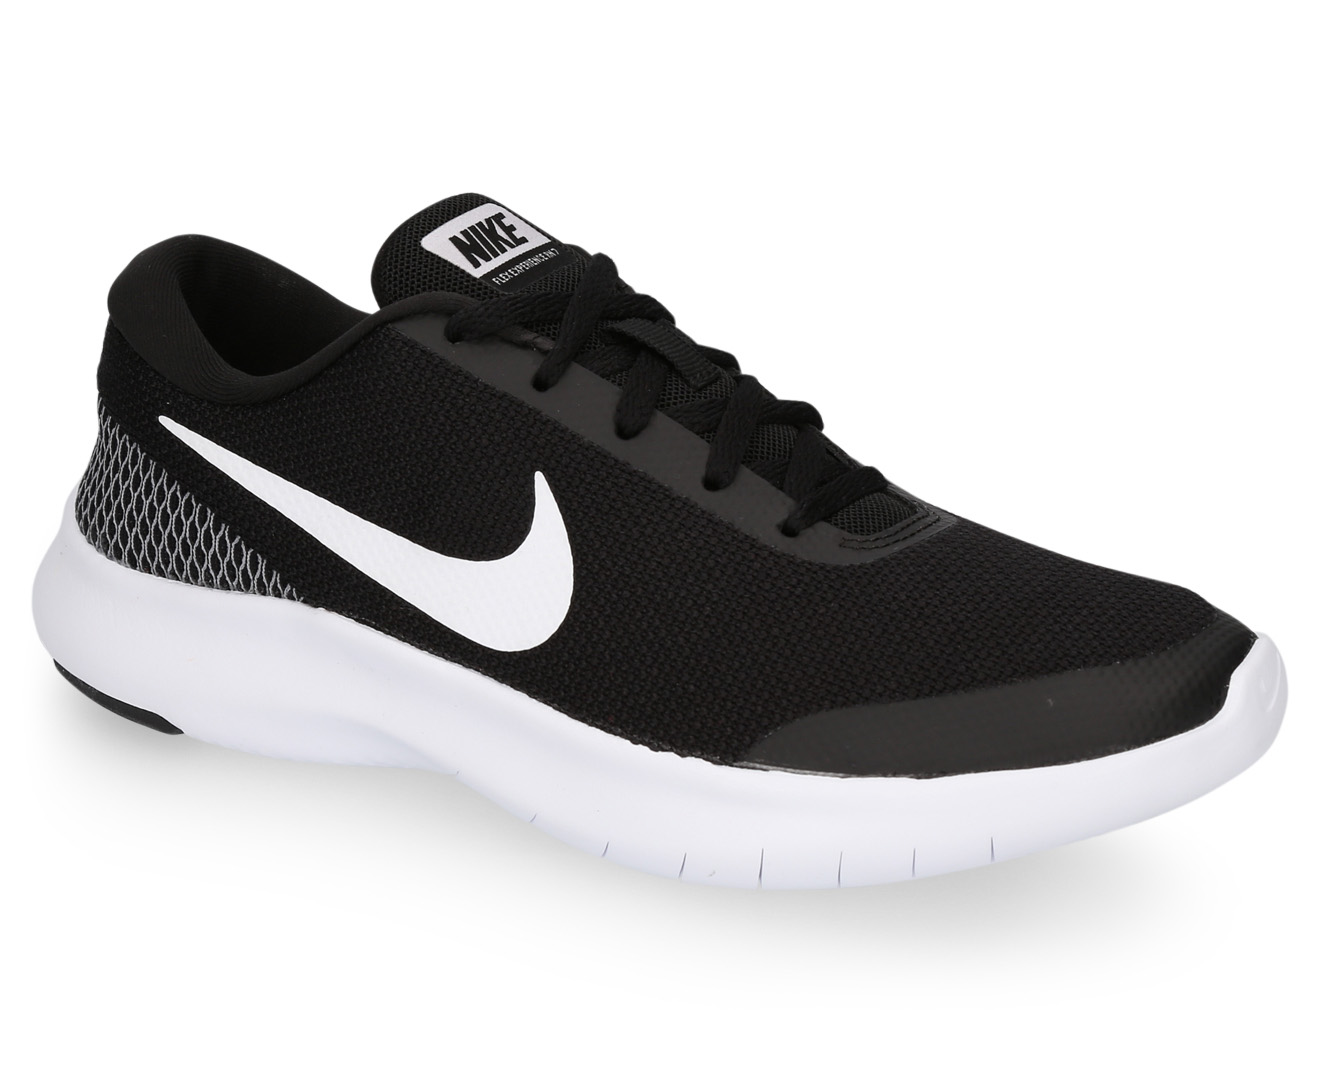 Nike Women's Flex Experience RN 7 Shoe - Black/White | Catch.com.au